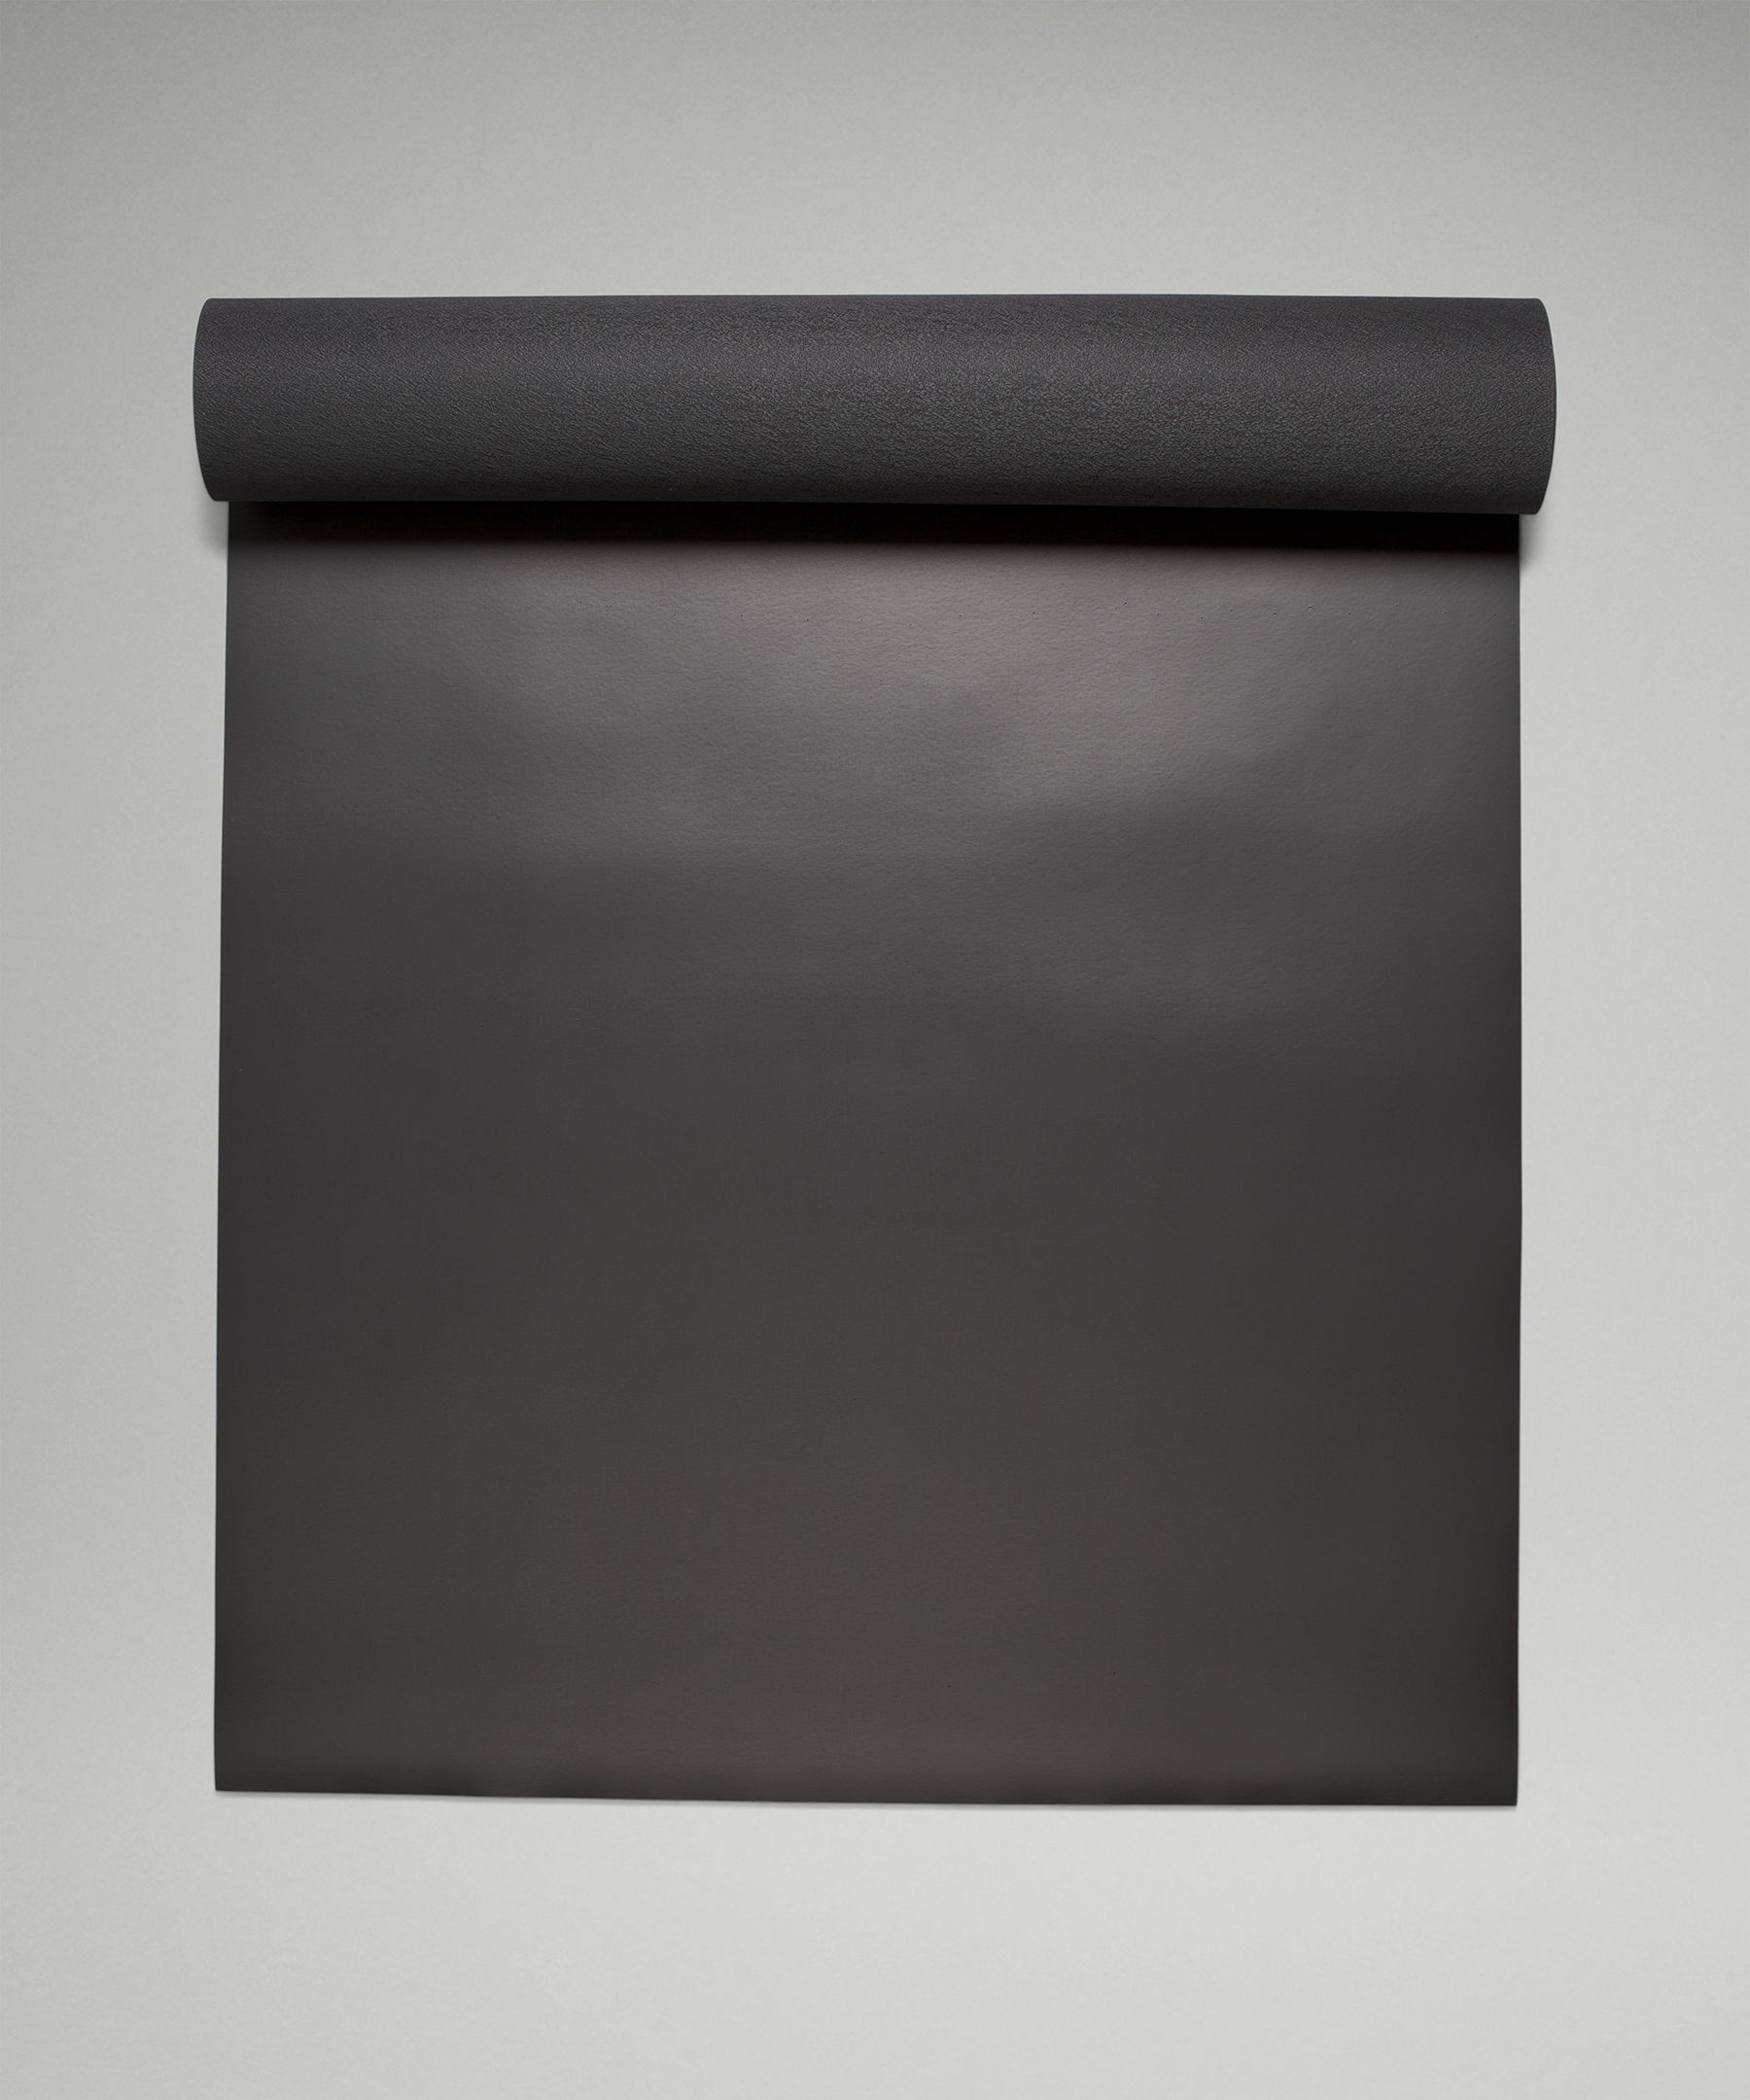 The Reversible Mat 5mm *Marble, black/white/black